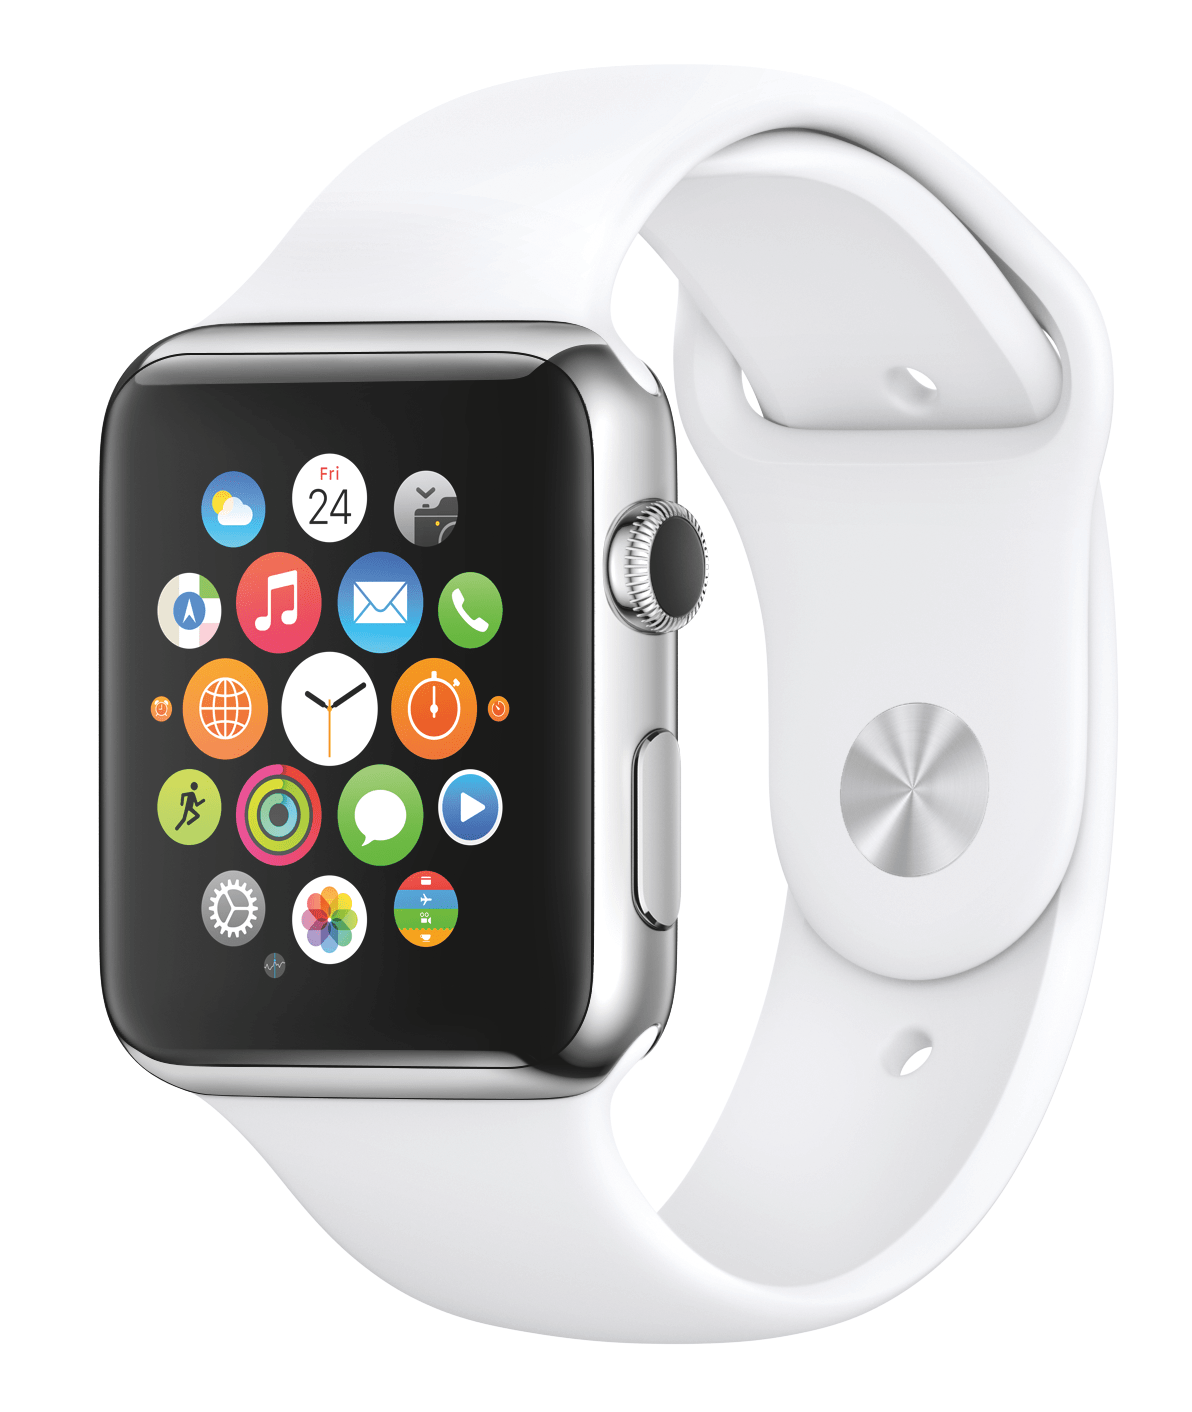 Apple Watch Home Screen